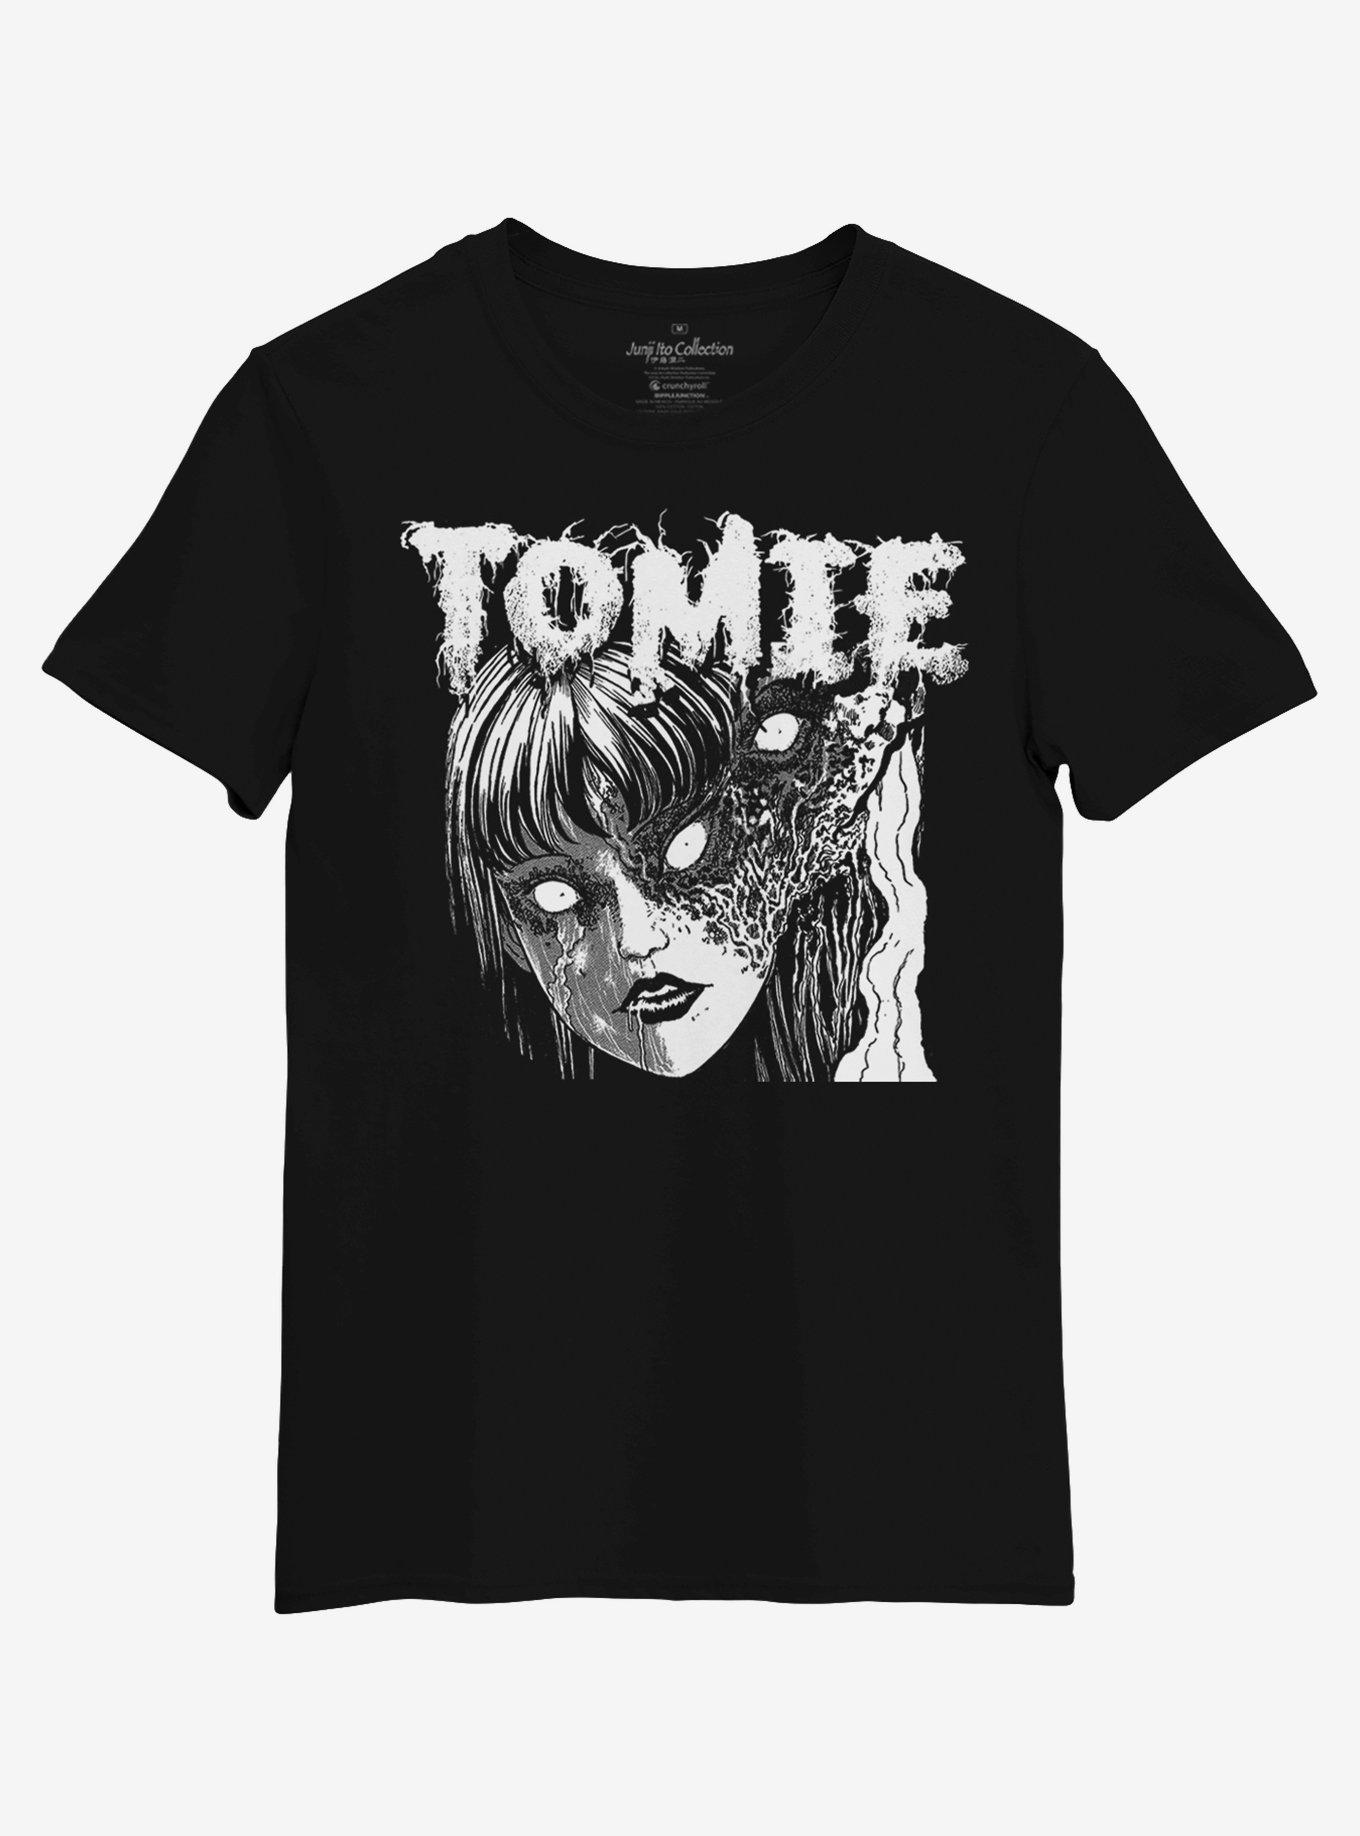 Junji Ito Tomie Title Face T-Shirt